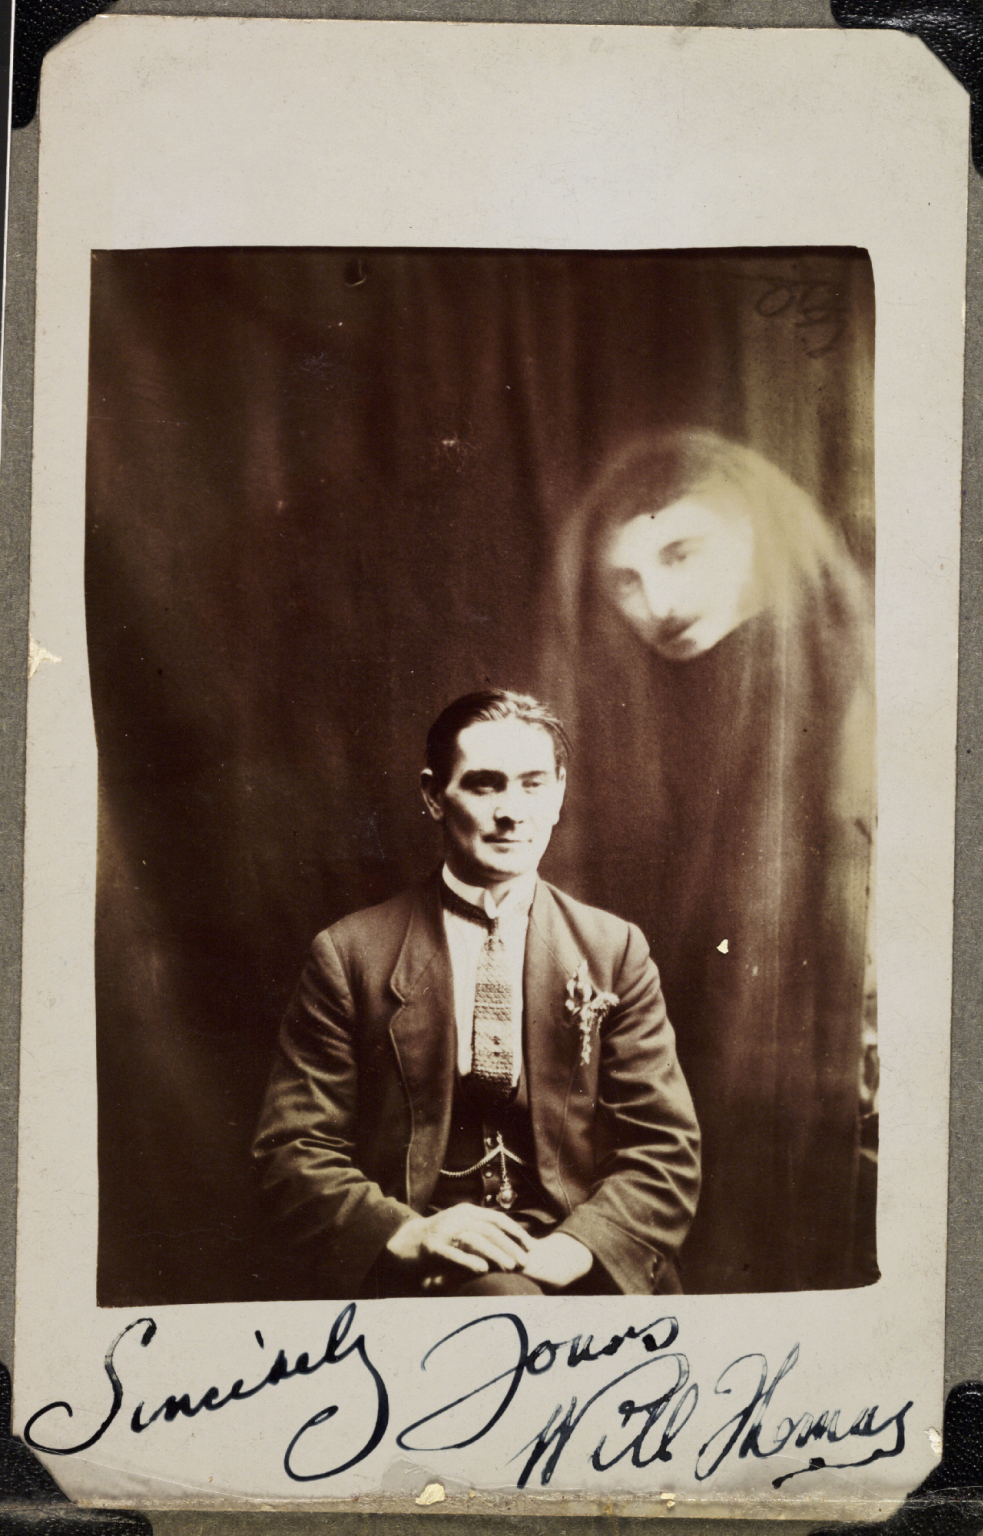 Spirit photograph by William Hope, c. 1920